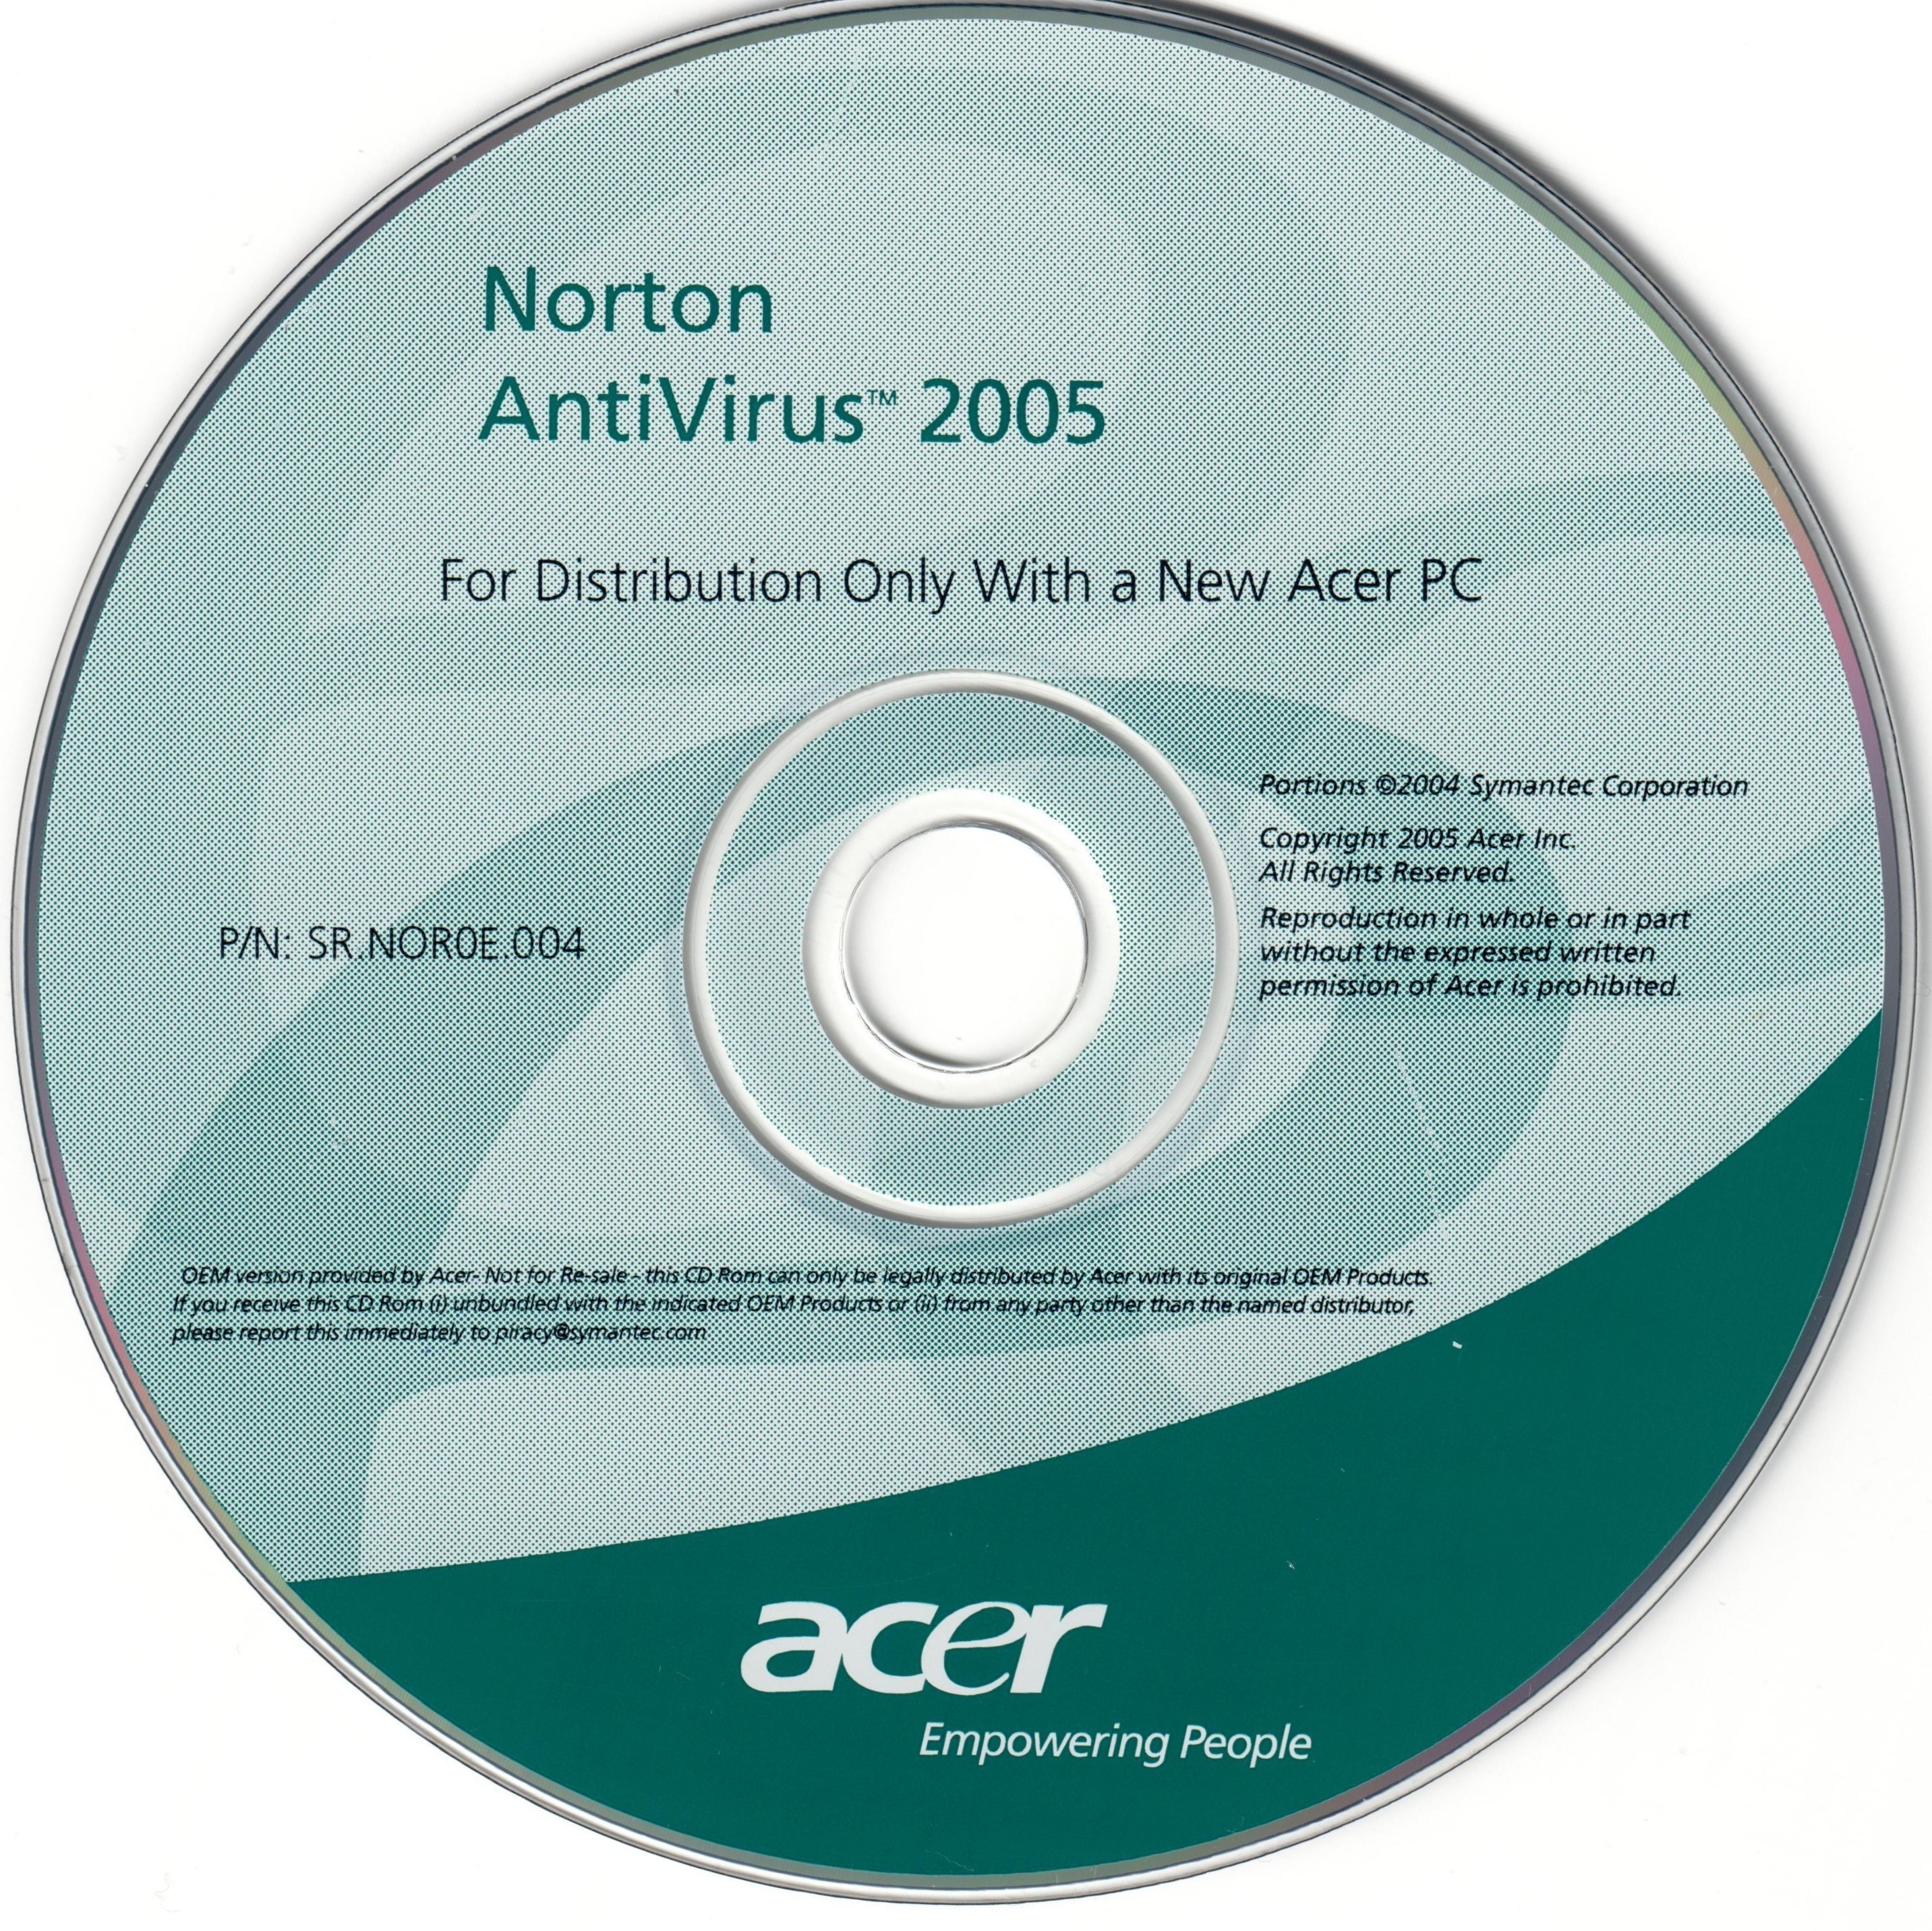 gratis norton antivirus 2005 volledige versie